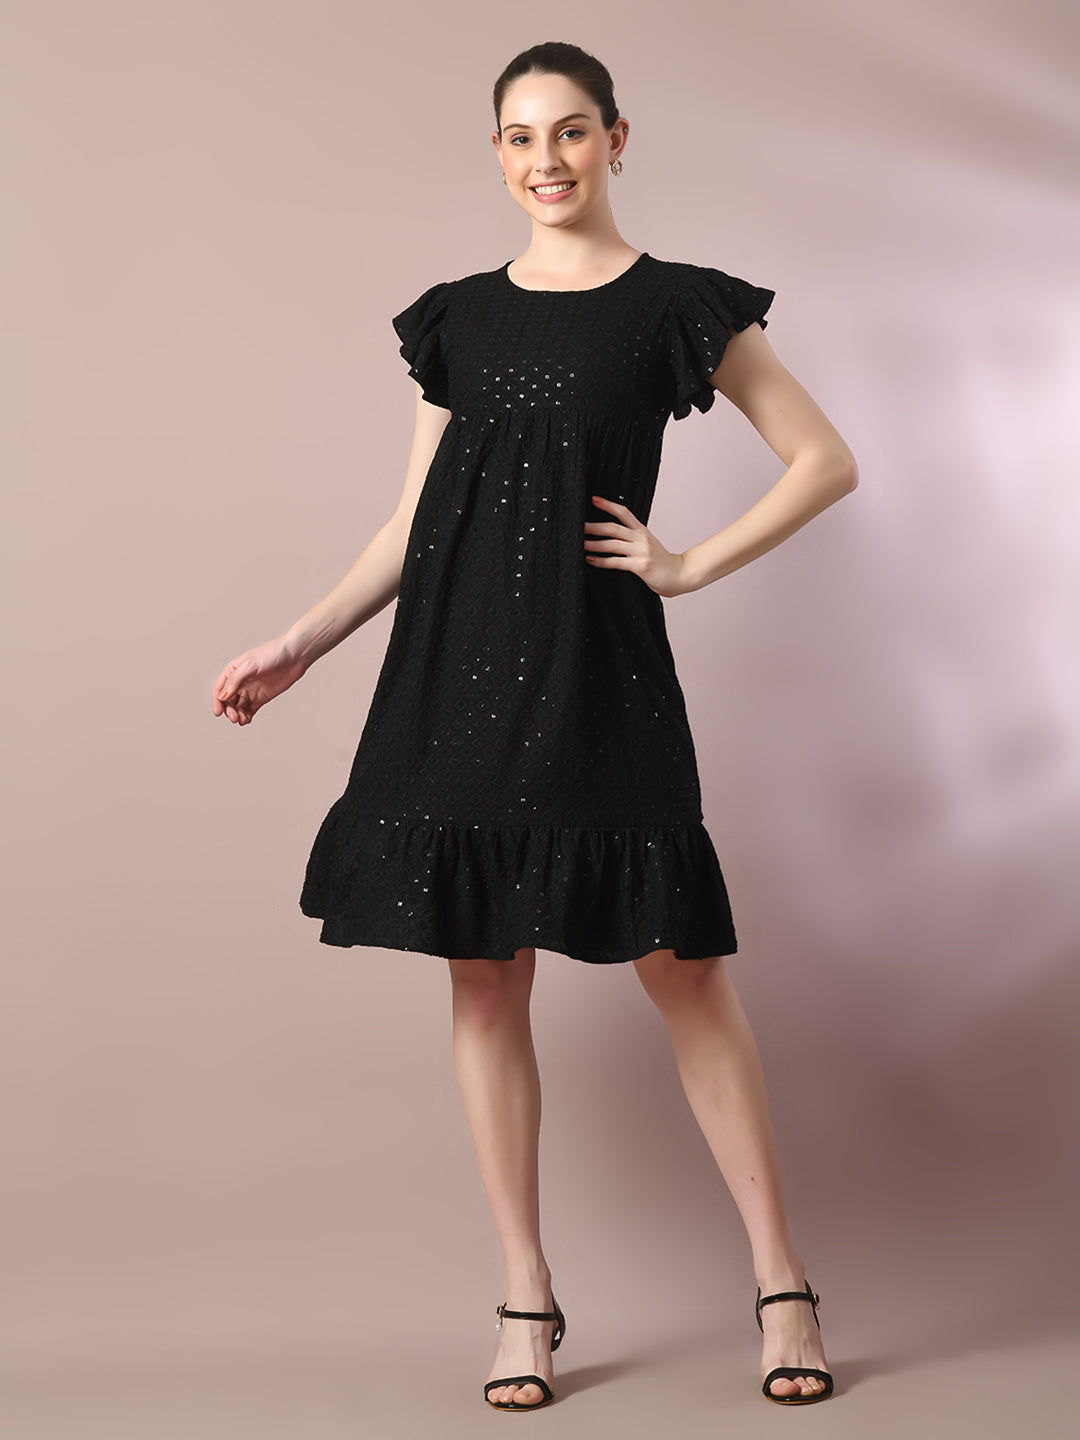 Women's  Black Embroidered Cotton Round Neck A-Line Party Dress  - Myshka